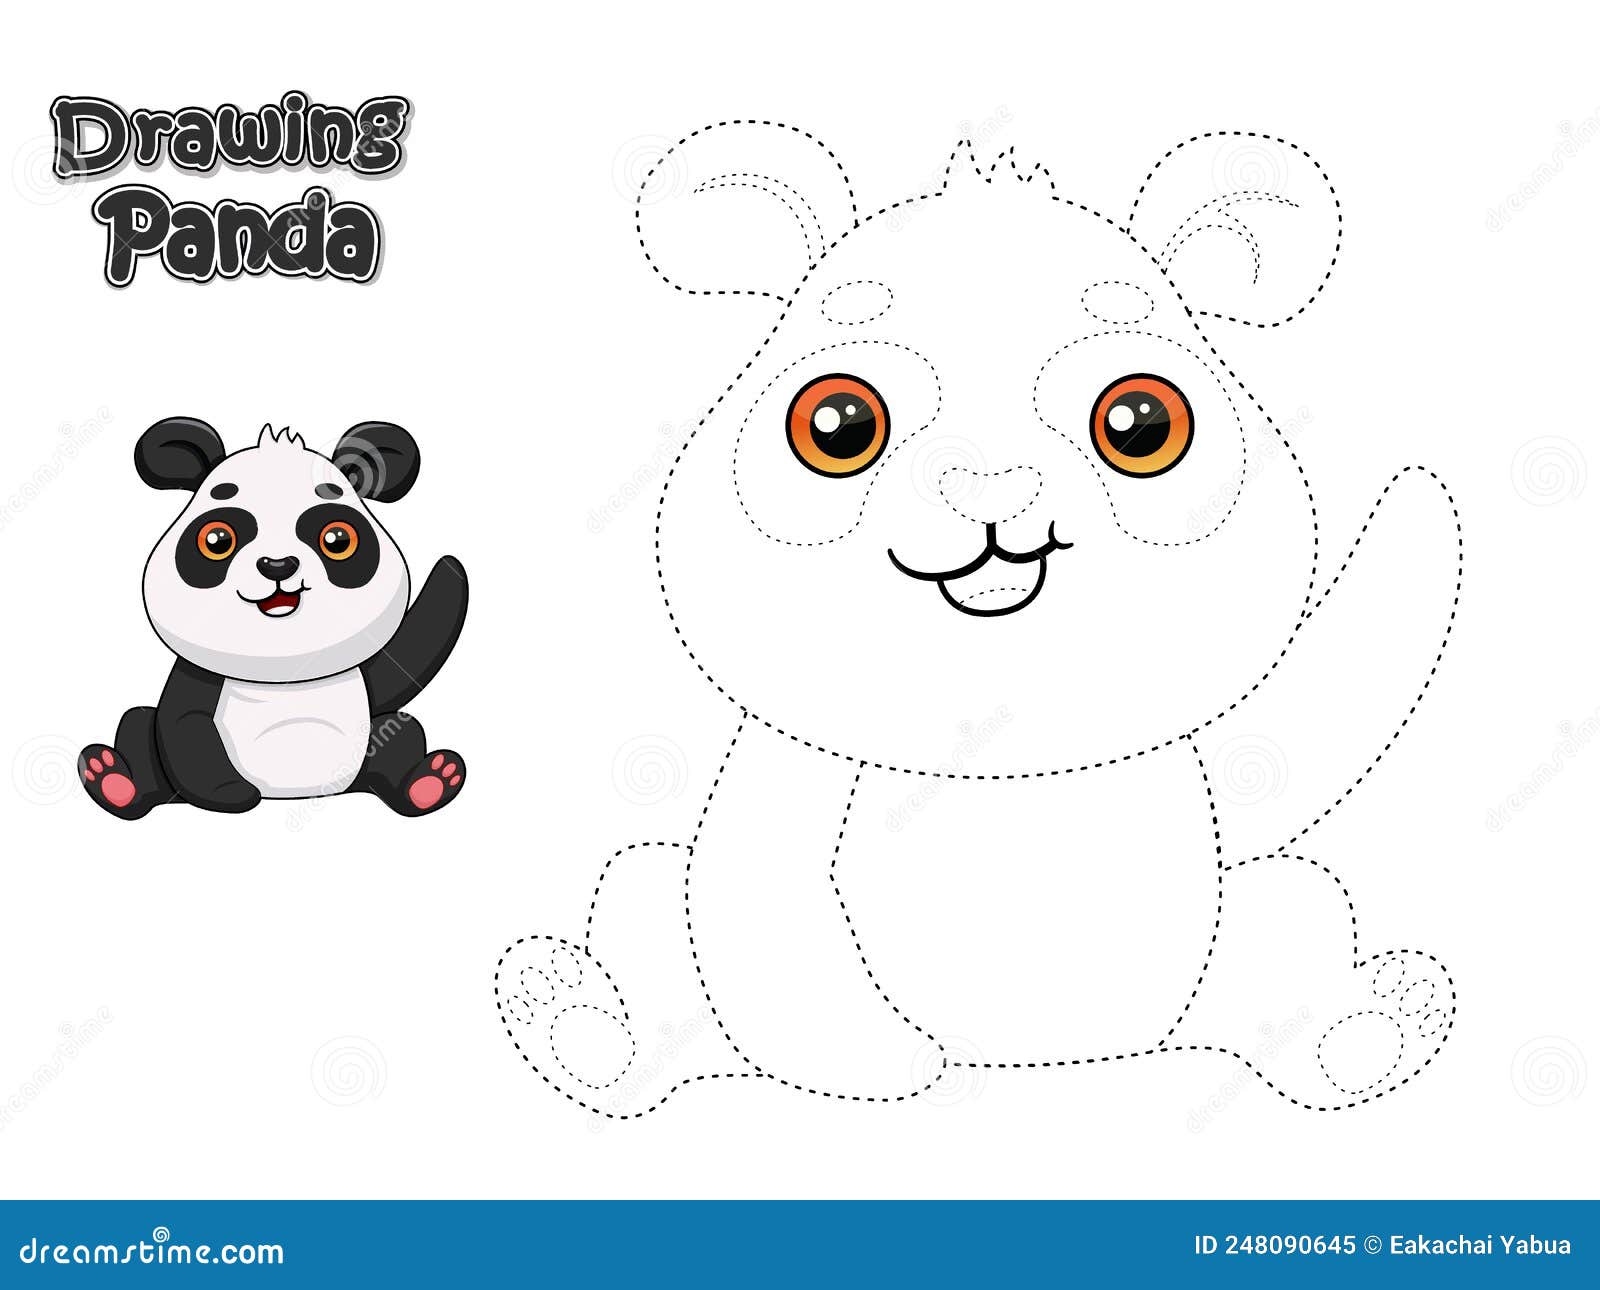 How To Draw A Cute Panda